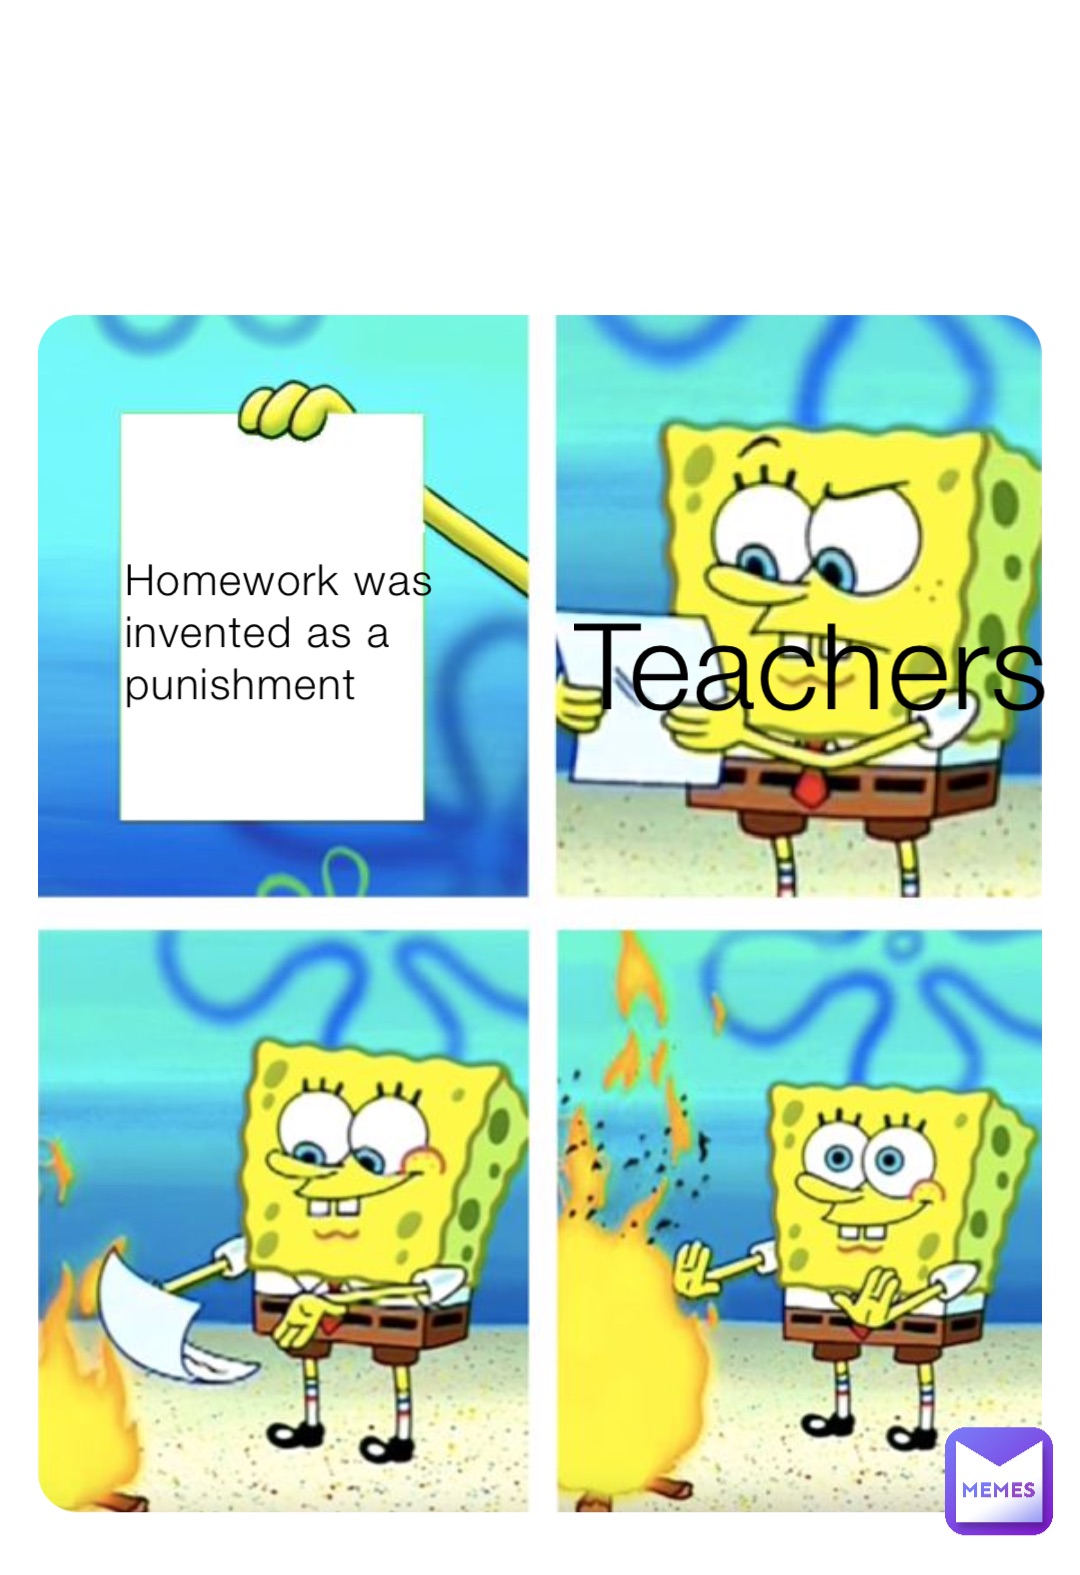 was homework a punishment